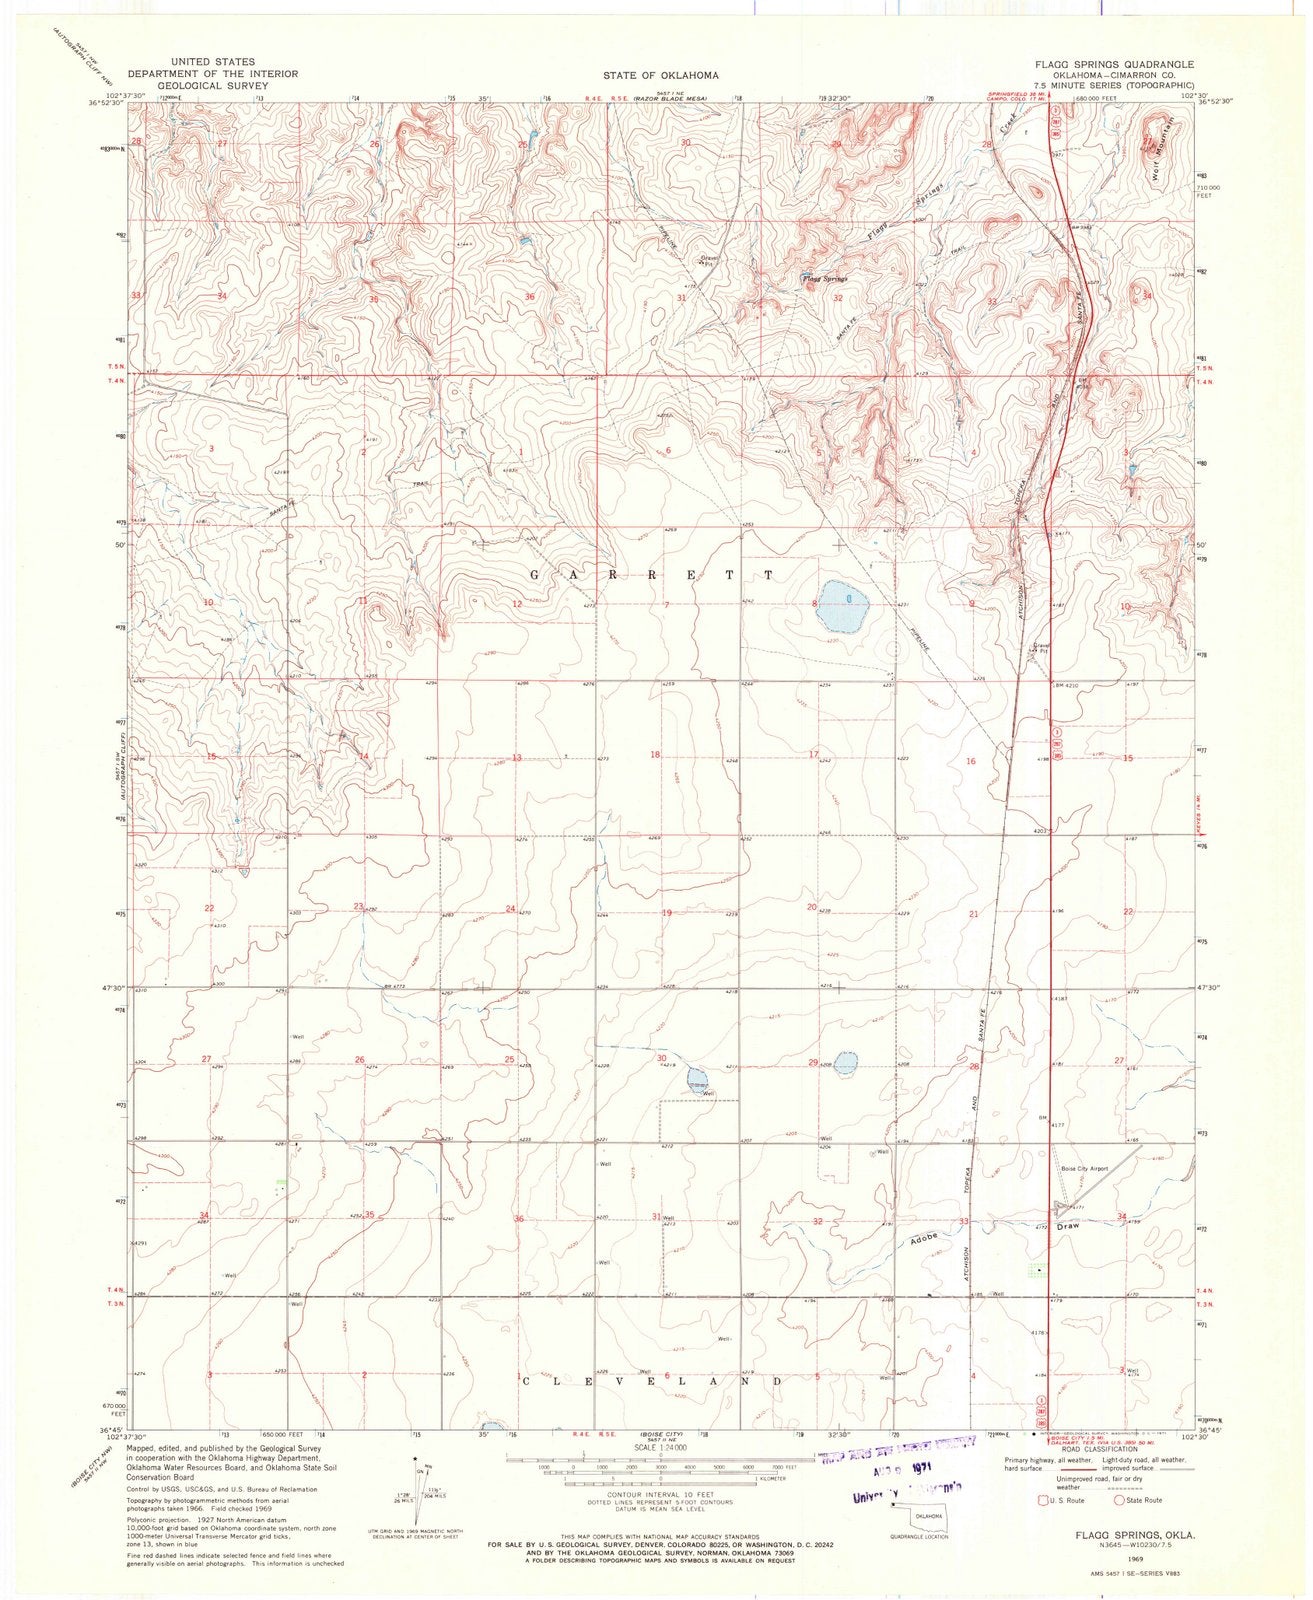 1969 Flagg Springs, OK - Oklahoma - USGS Topographic Map